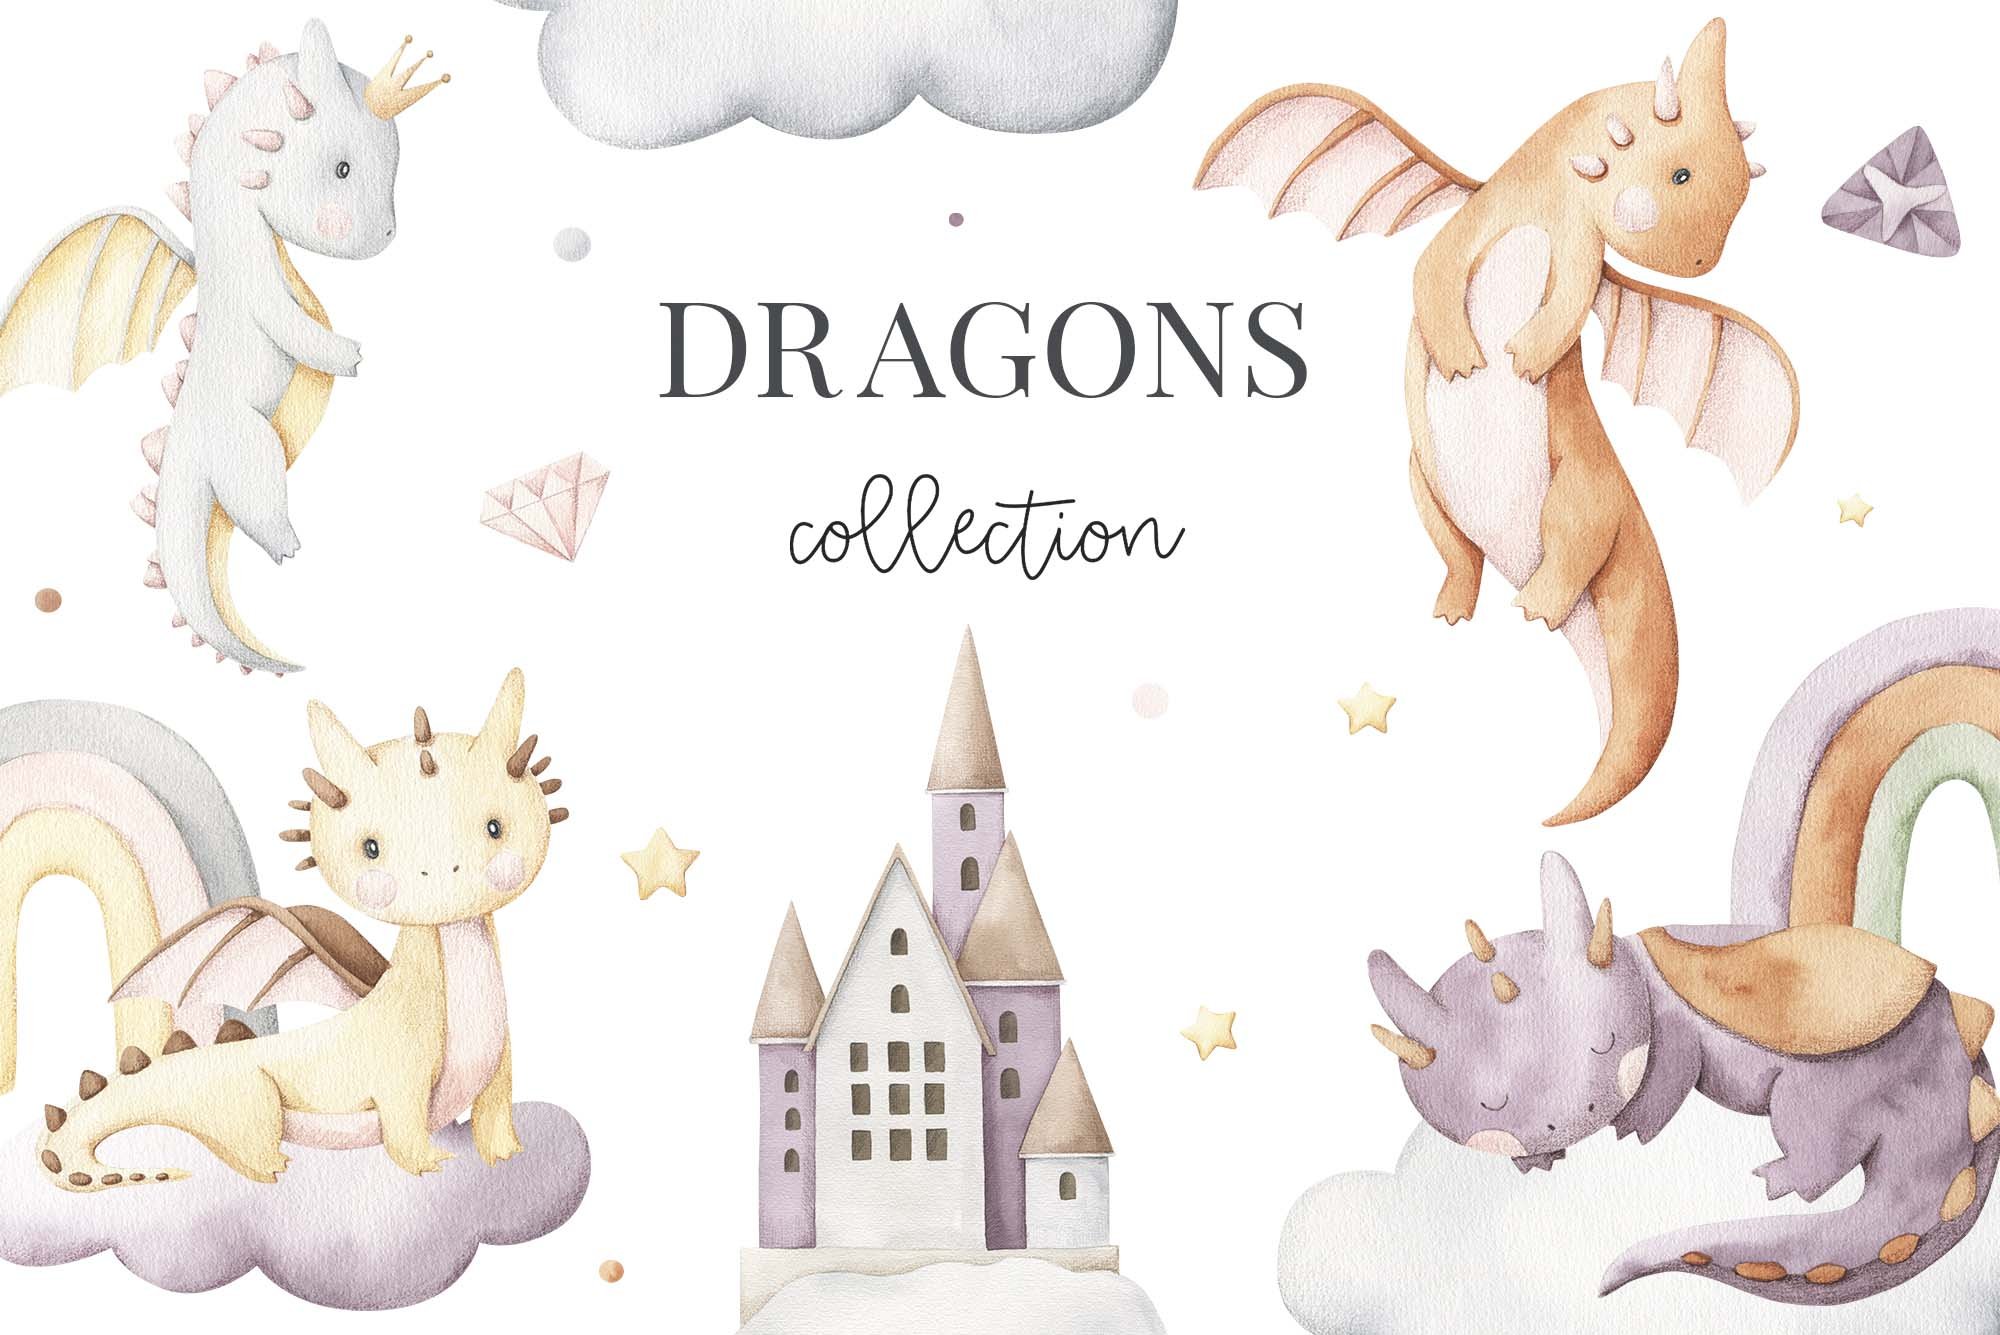 Dragons - watercolor set cover image.